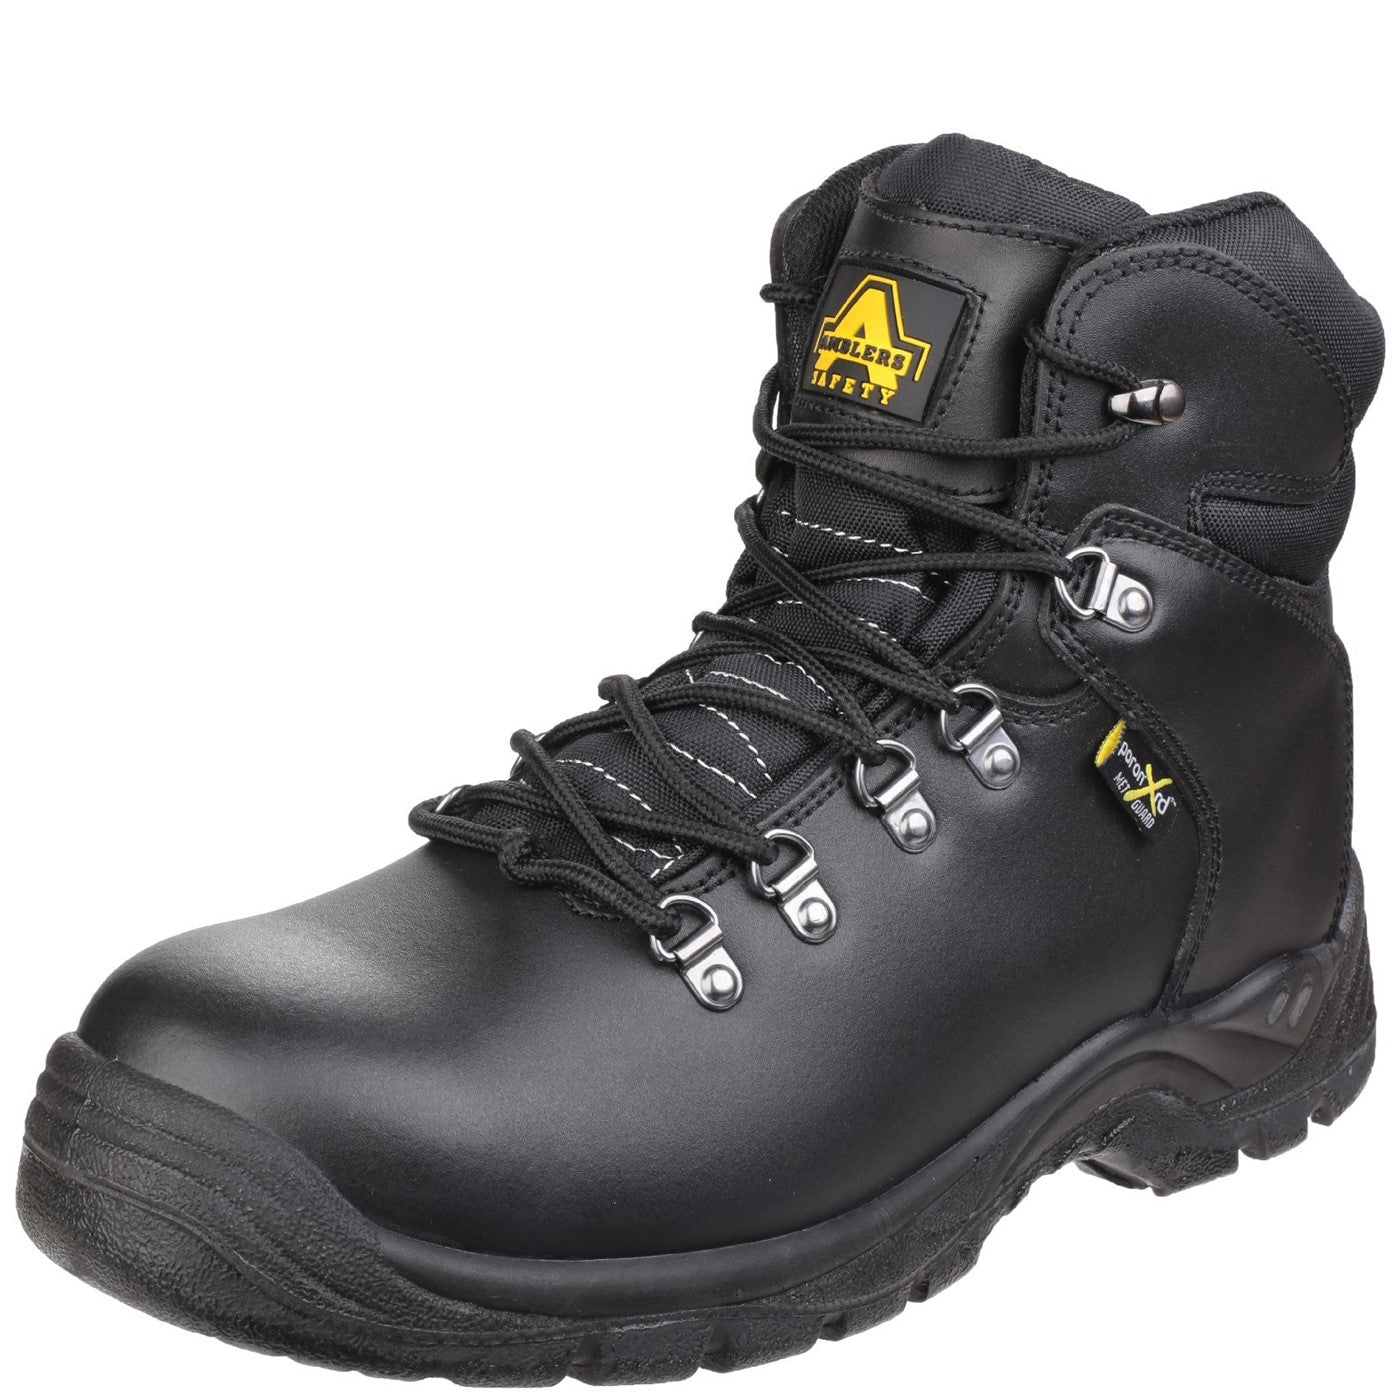 Men's Amblers Safety AS335 Poron XRD Internal Metatarsal Safety Boot